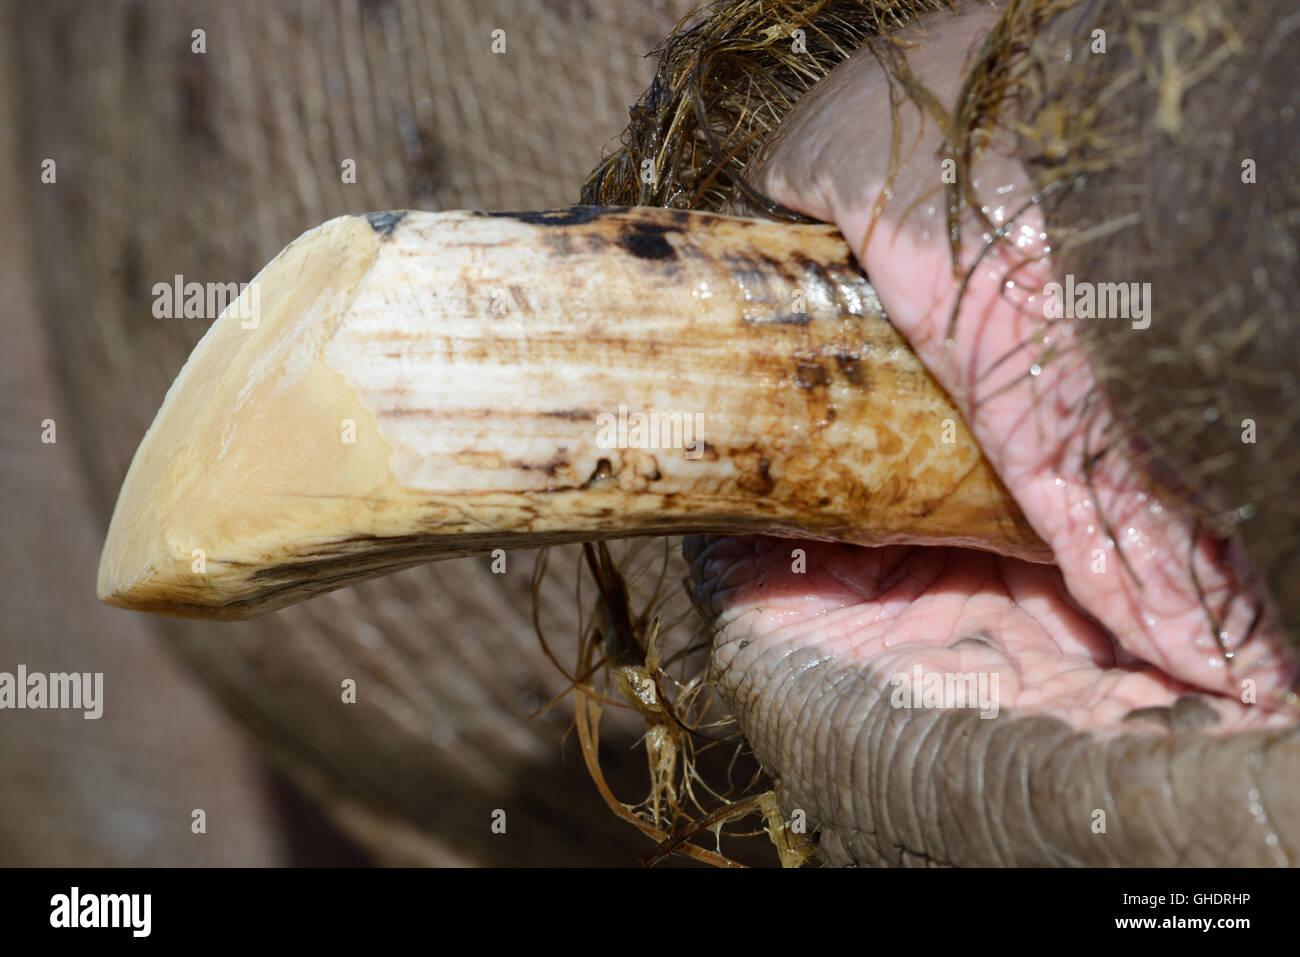 Canine Tusk or Ivory Tooth of Common Hippopotamus or Hippo, Hippopotamus amphibius Stock Photo